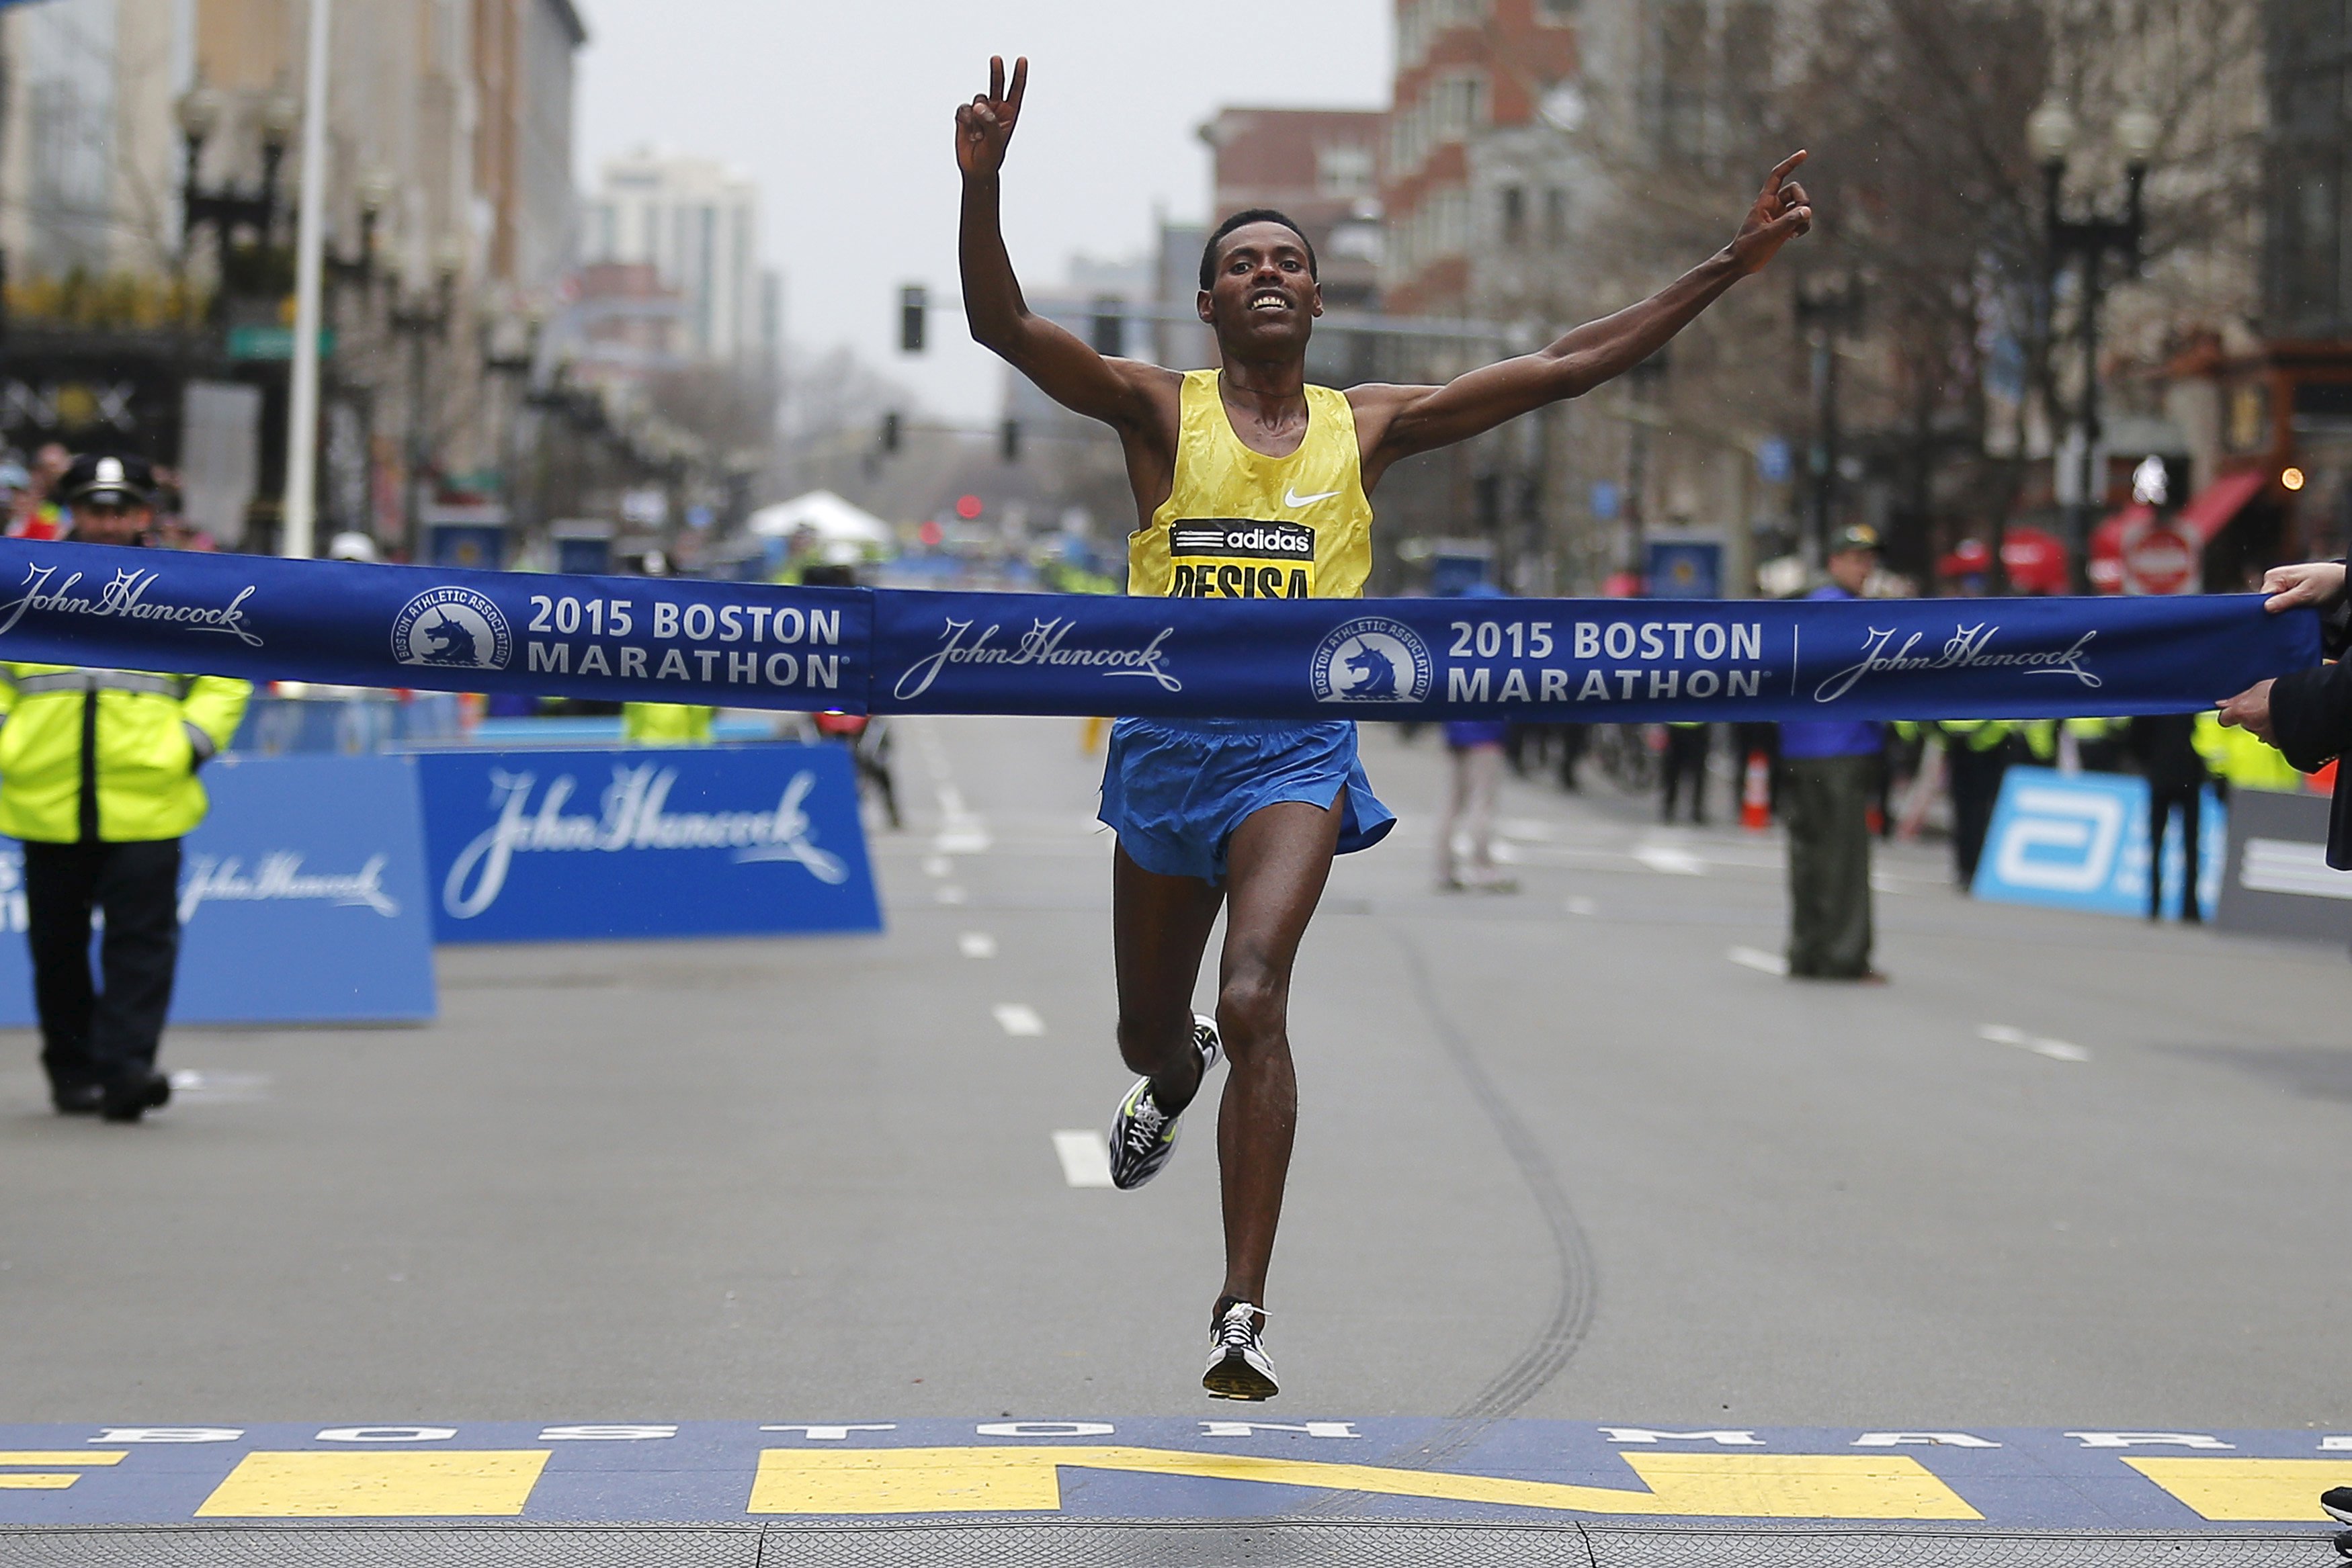 Ethiopia's champions in Boston to defend marathon titles | GMA News Online